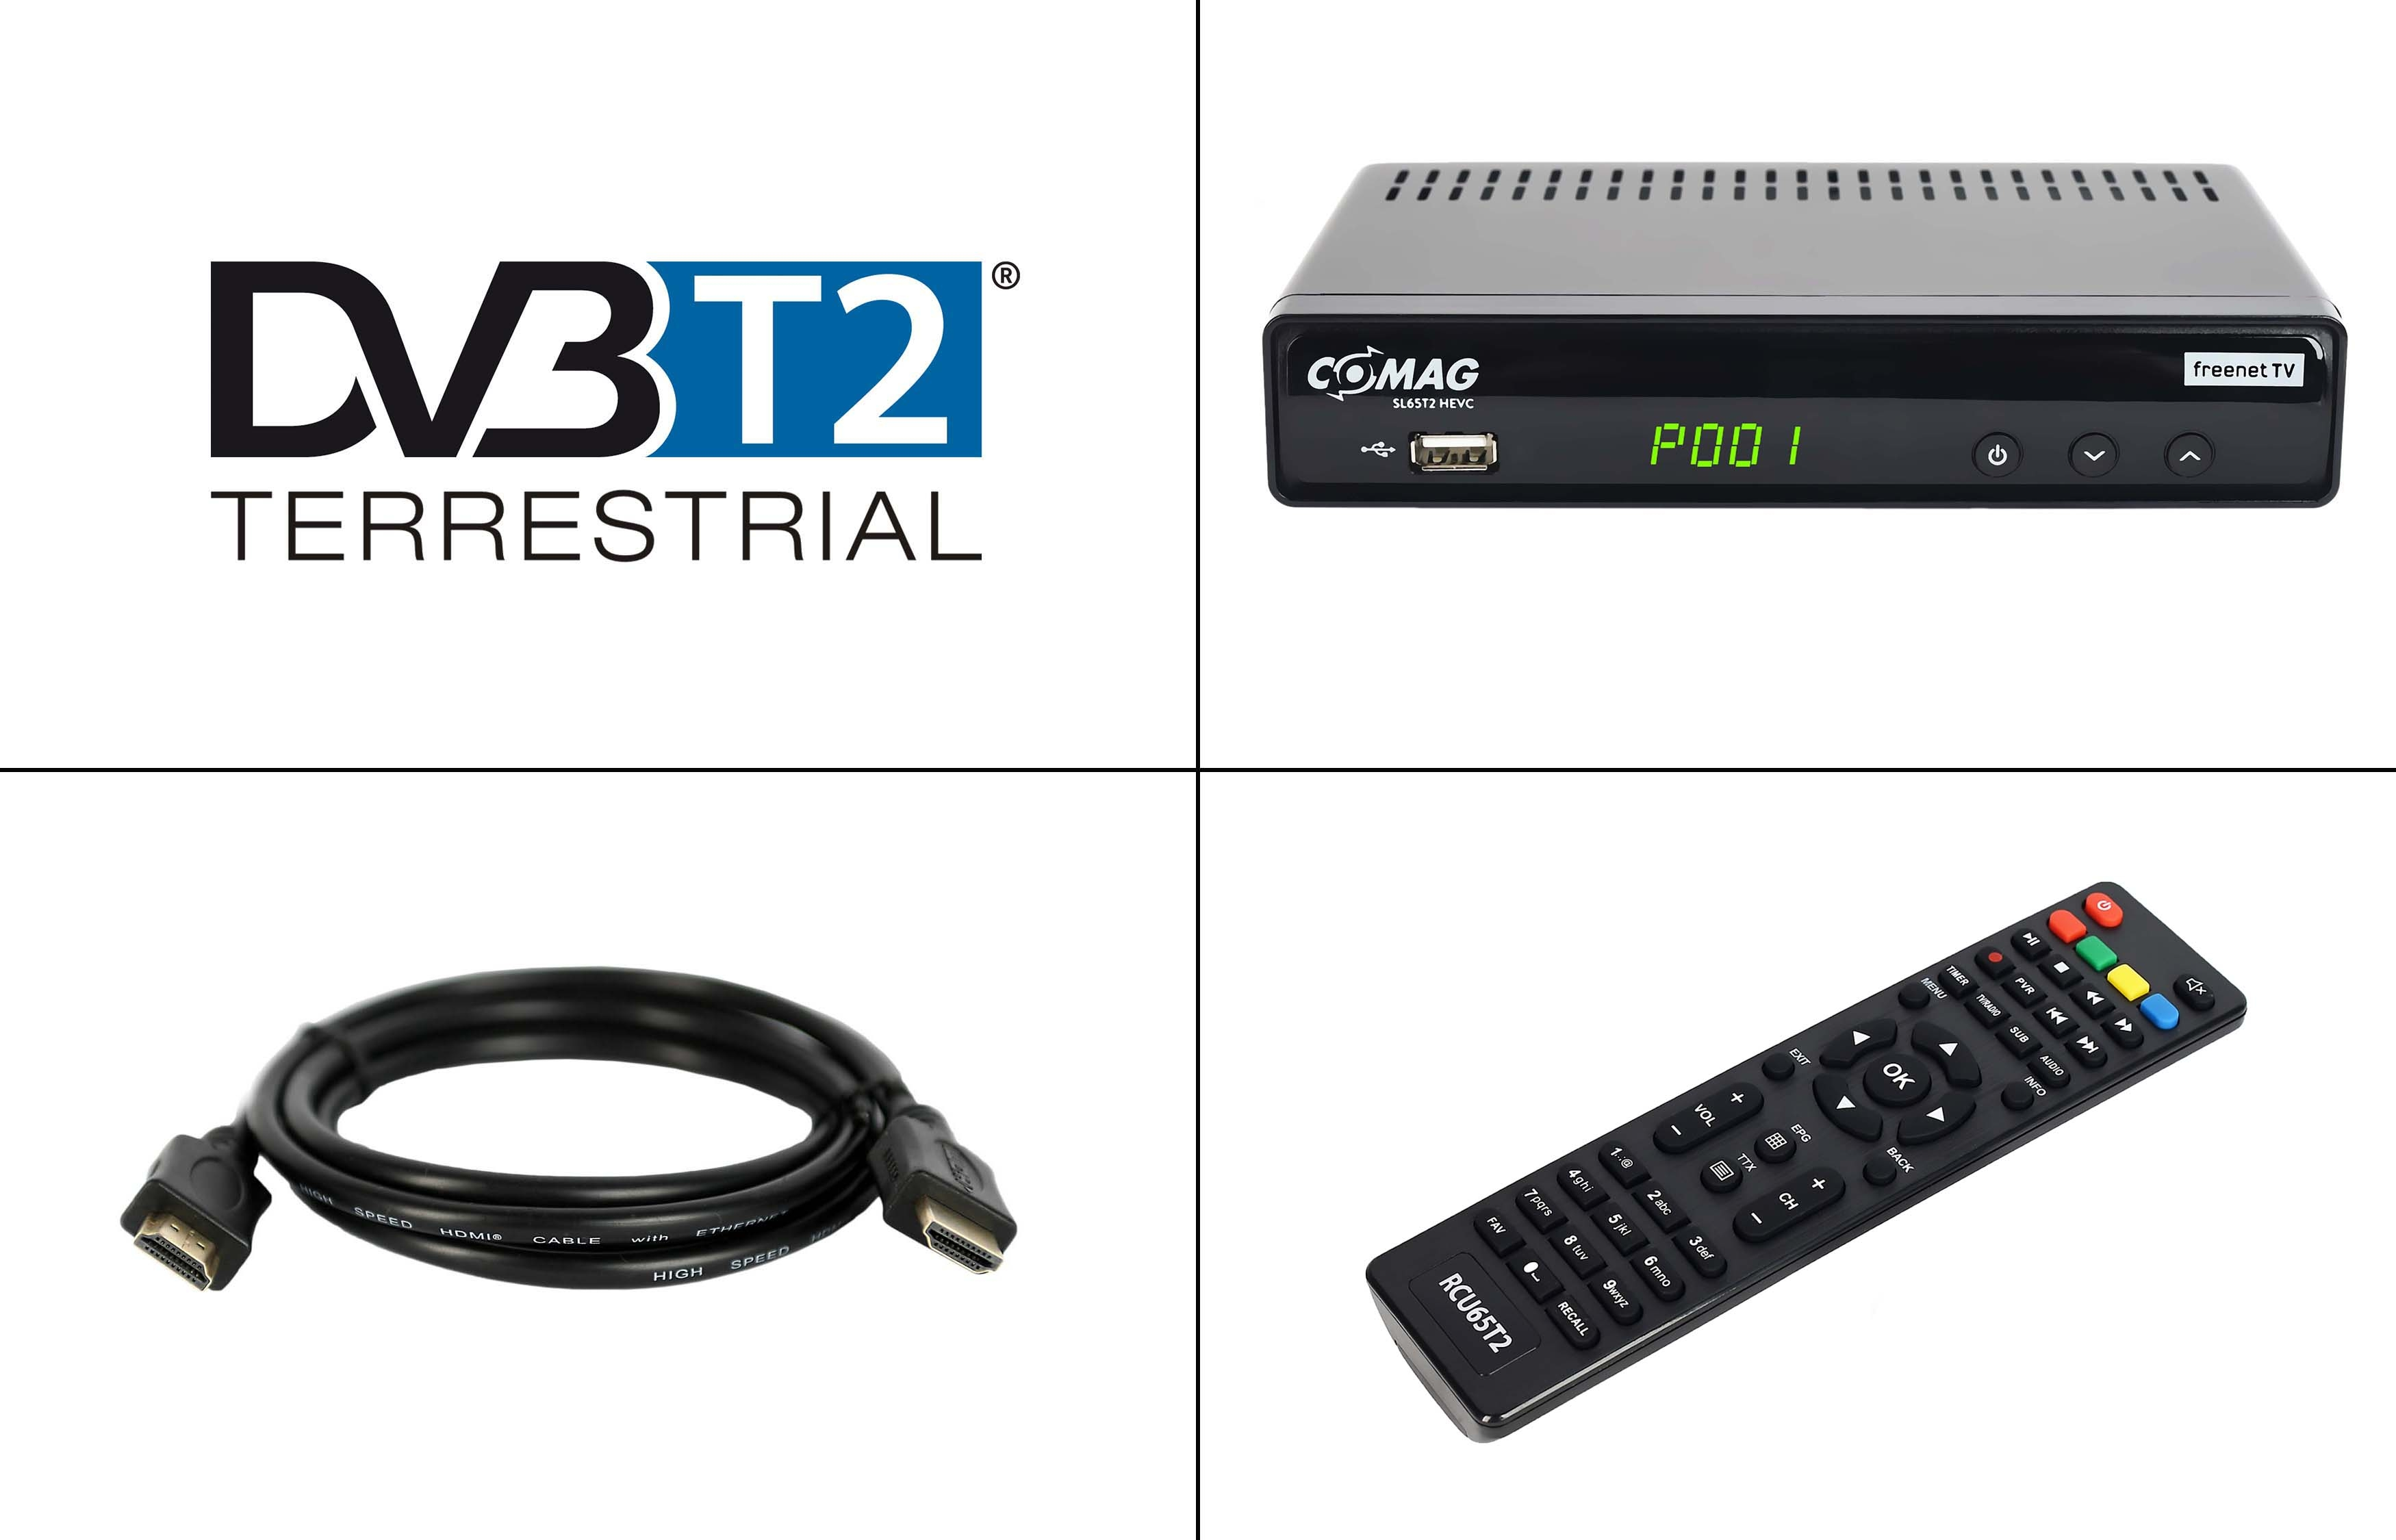 (HDTV, DVB-T2 Bundel SL65T2 COMAG HDMI DVB-T, PVR-Funktion, DVB-T-Receiver (H.265), (H.264), schwarz) DVB-T2